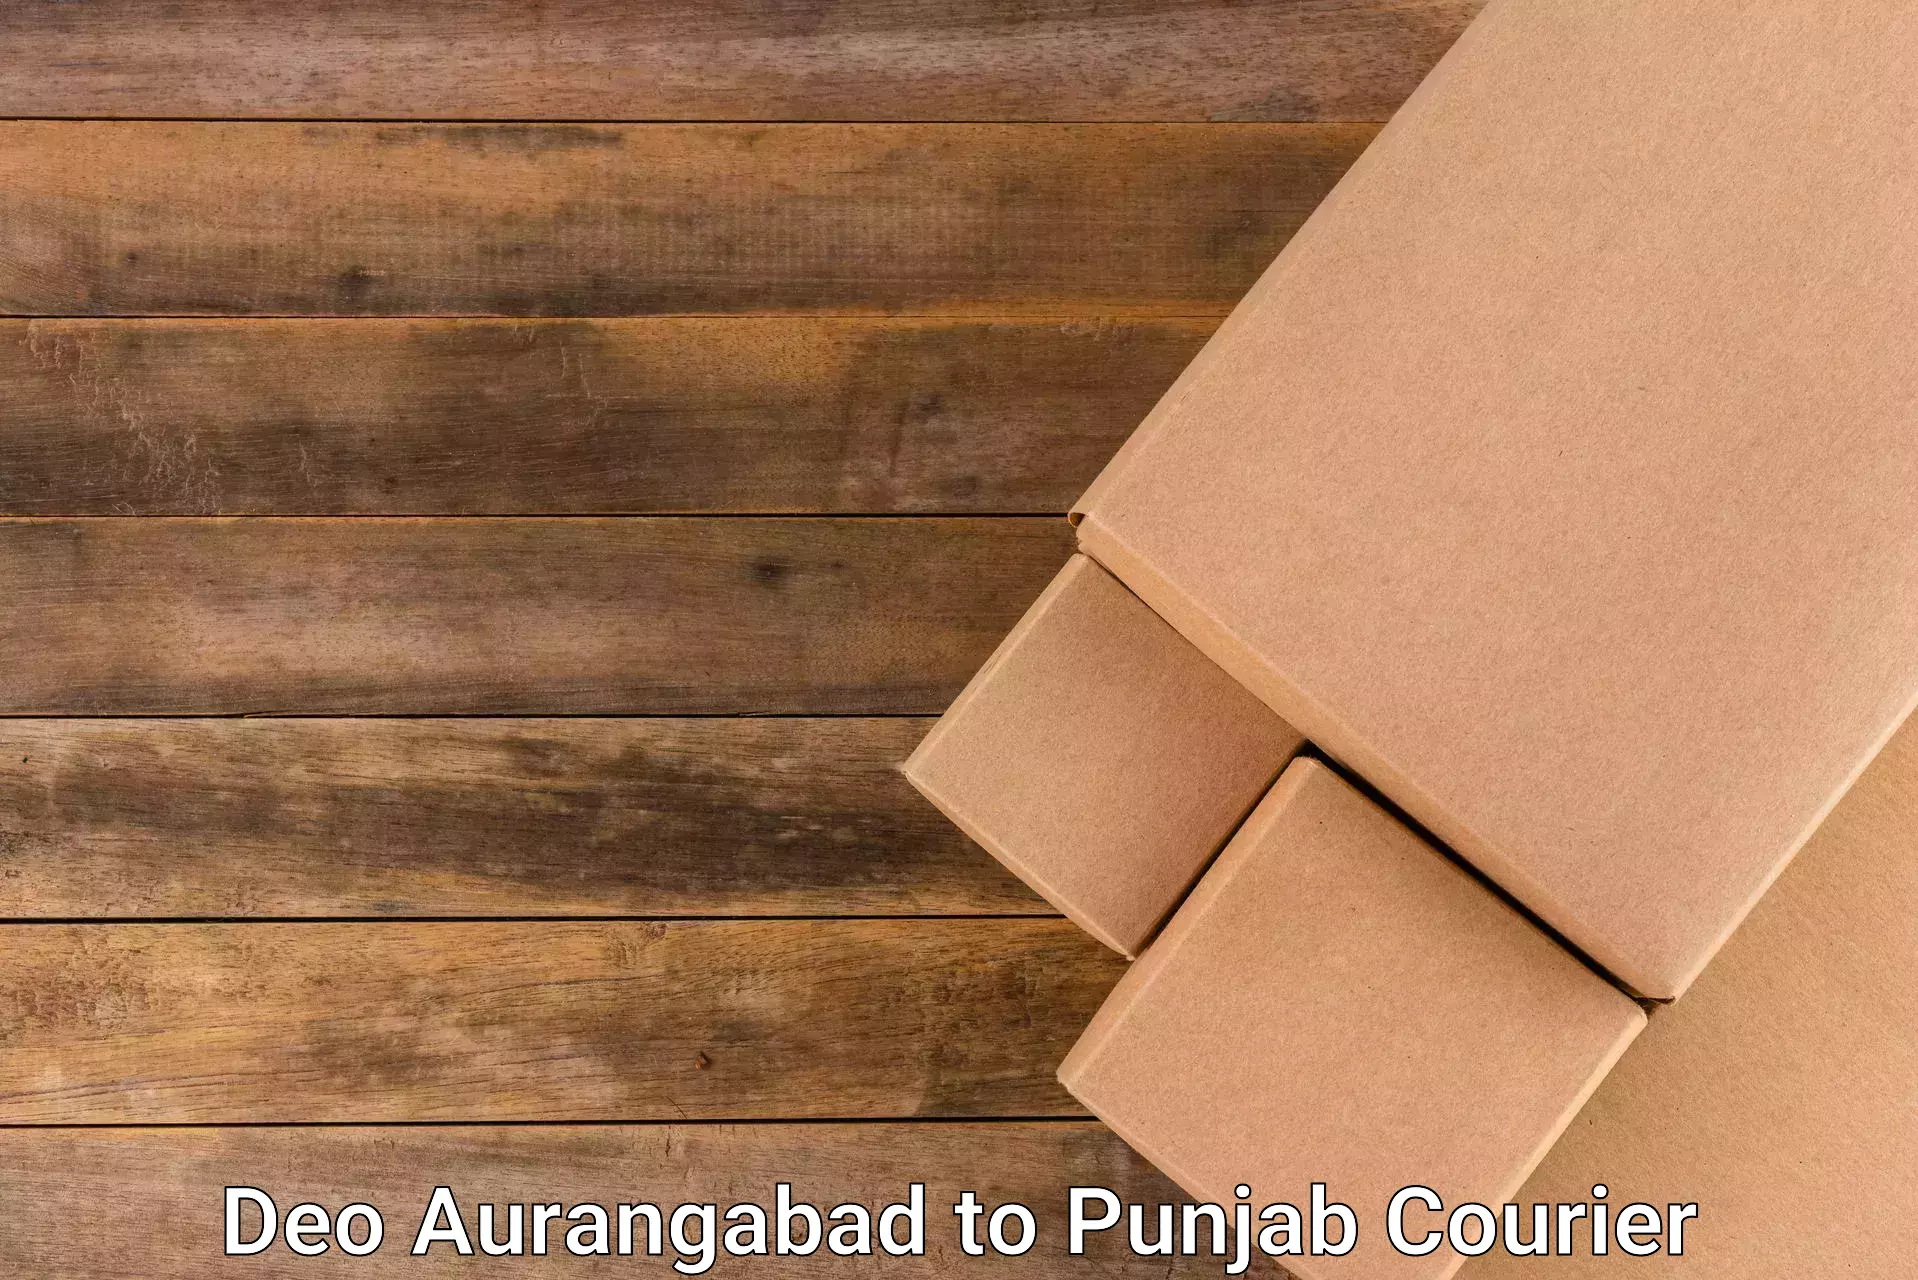 Express logistics providers Deo Aurangabad to Pathankot